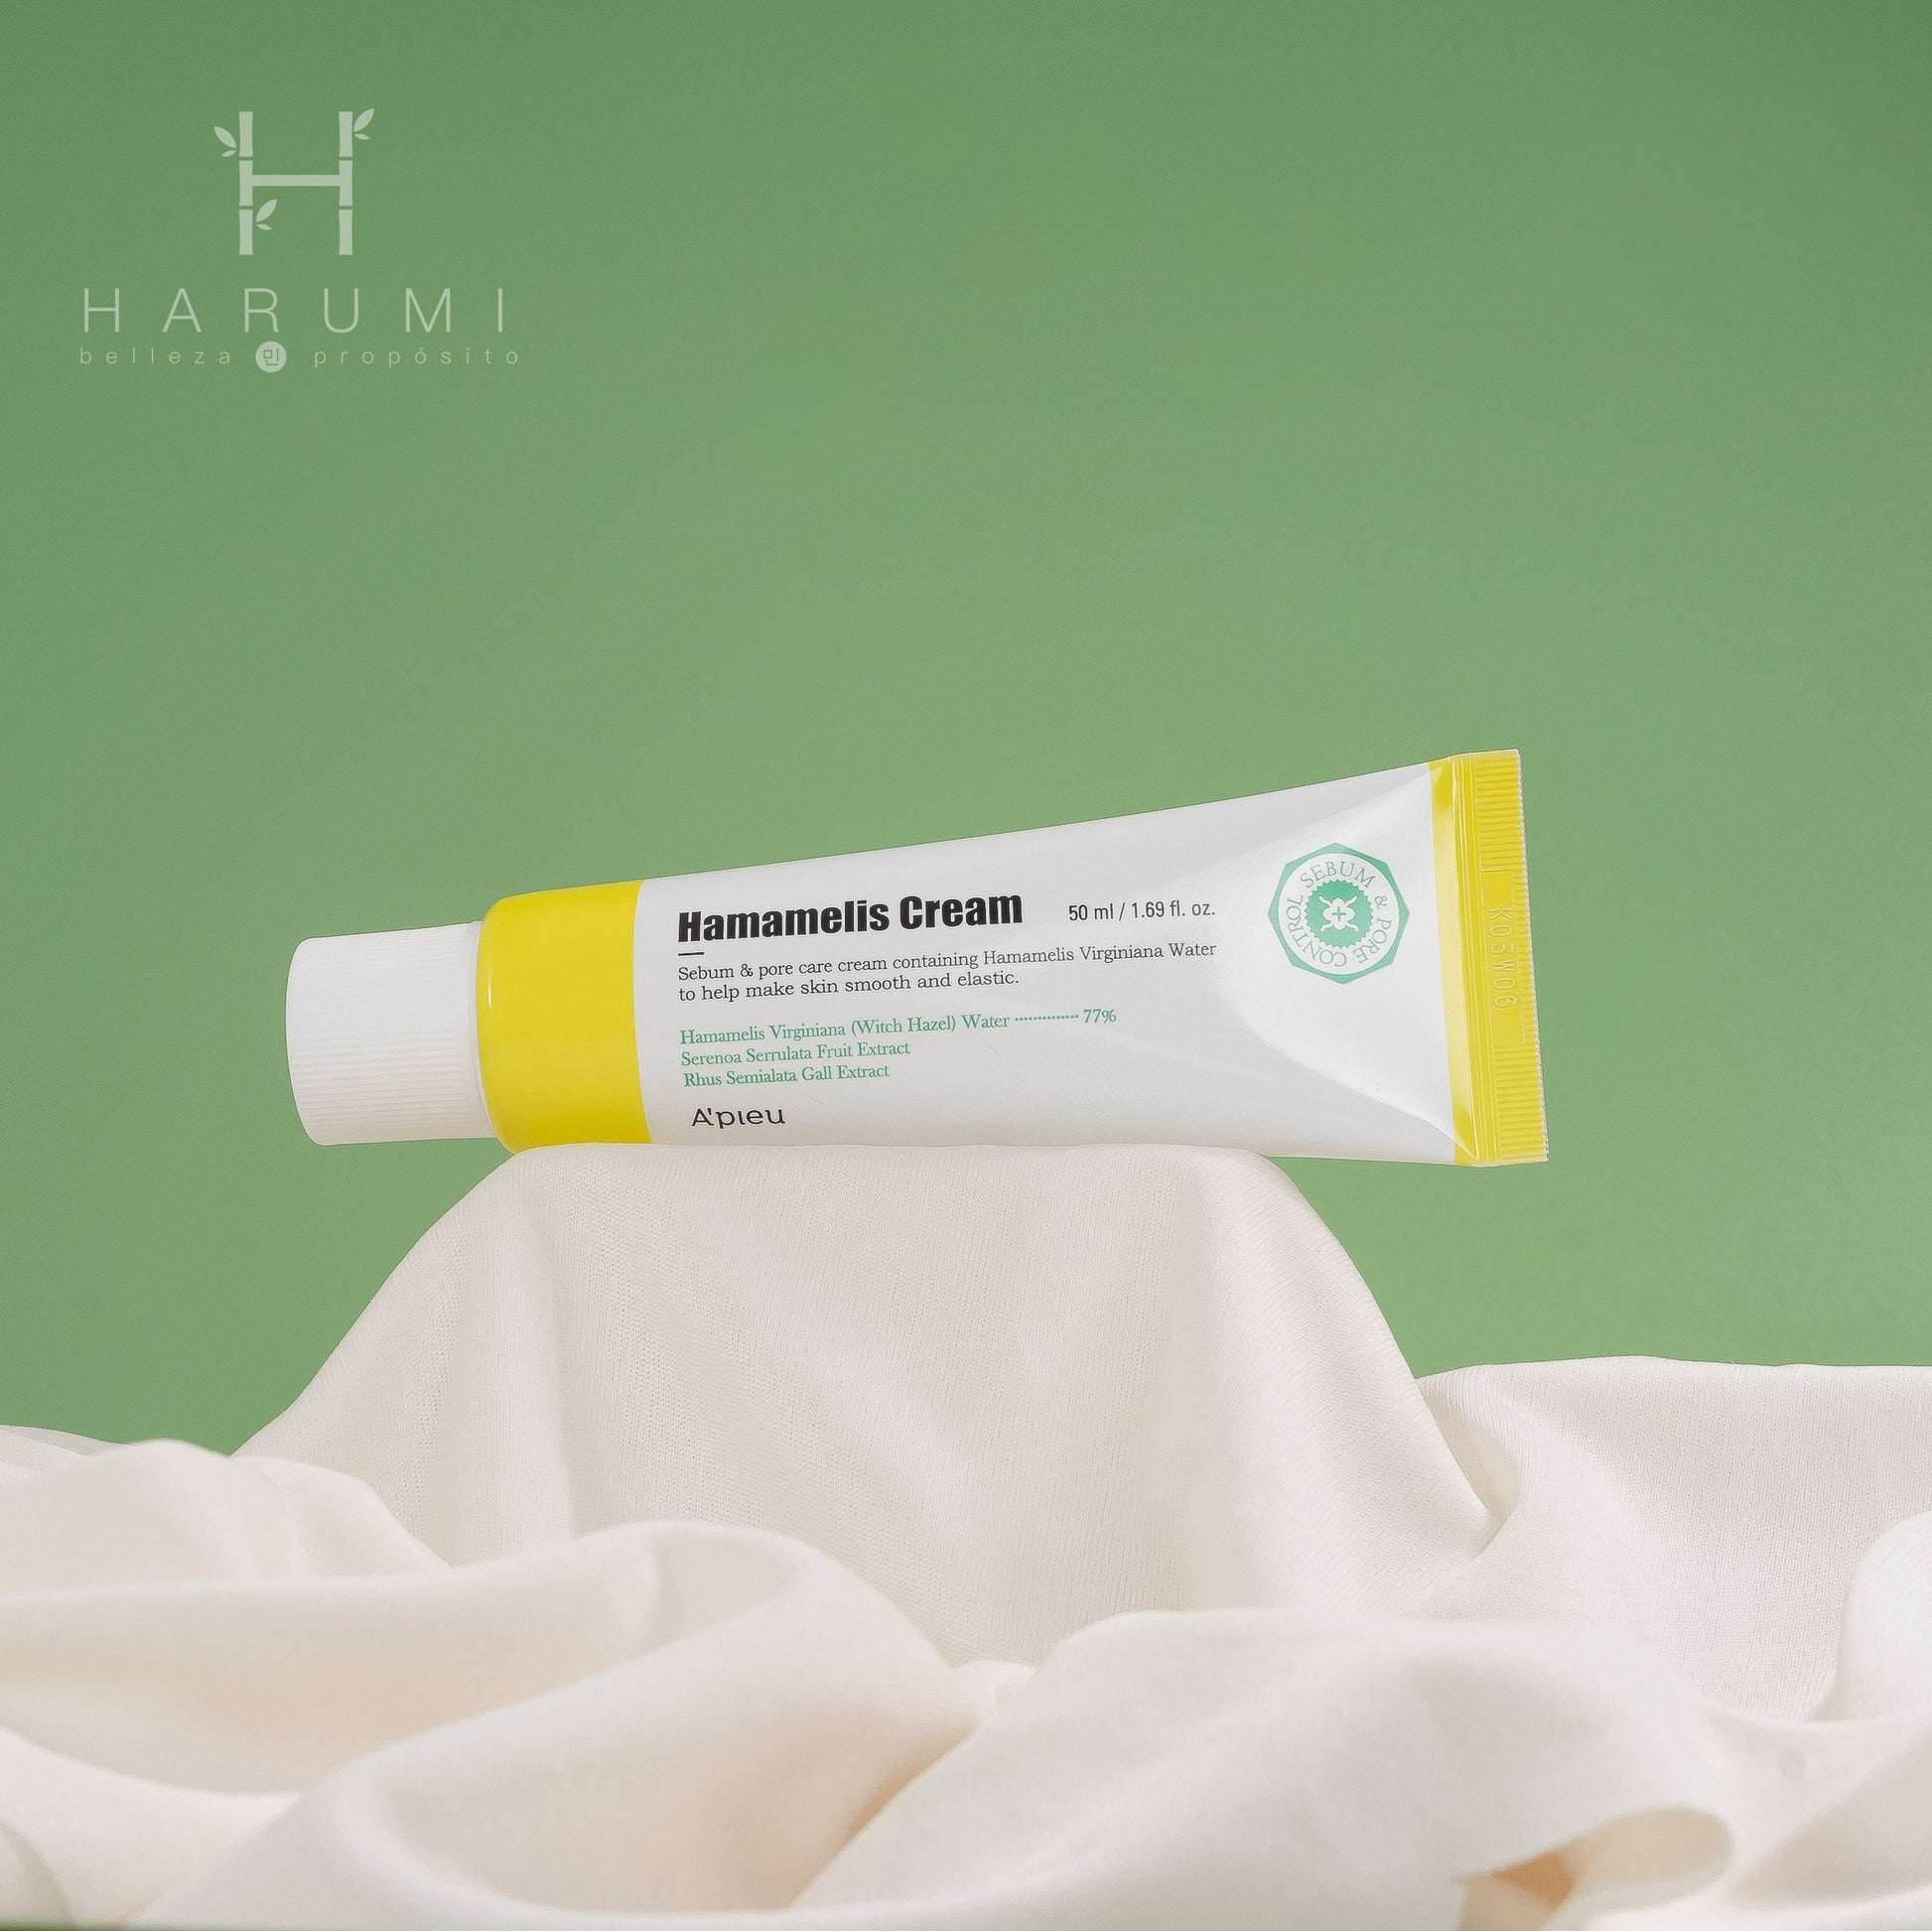 Apieu Hamamelis cream Skincare maquillaje productos de belleza coreanos en Colombia kbeauty